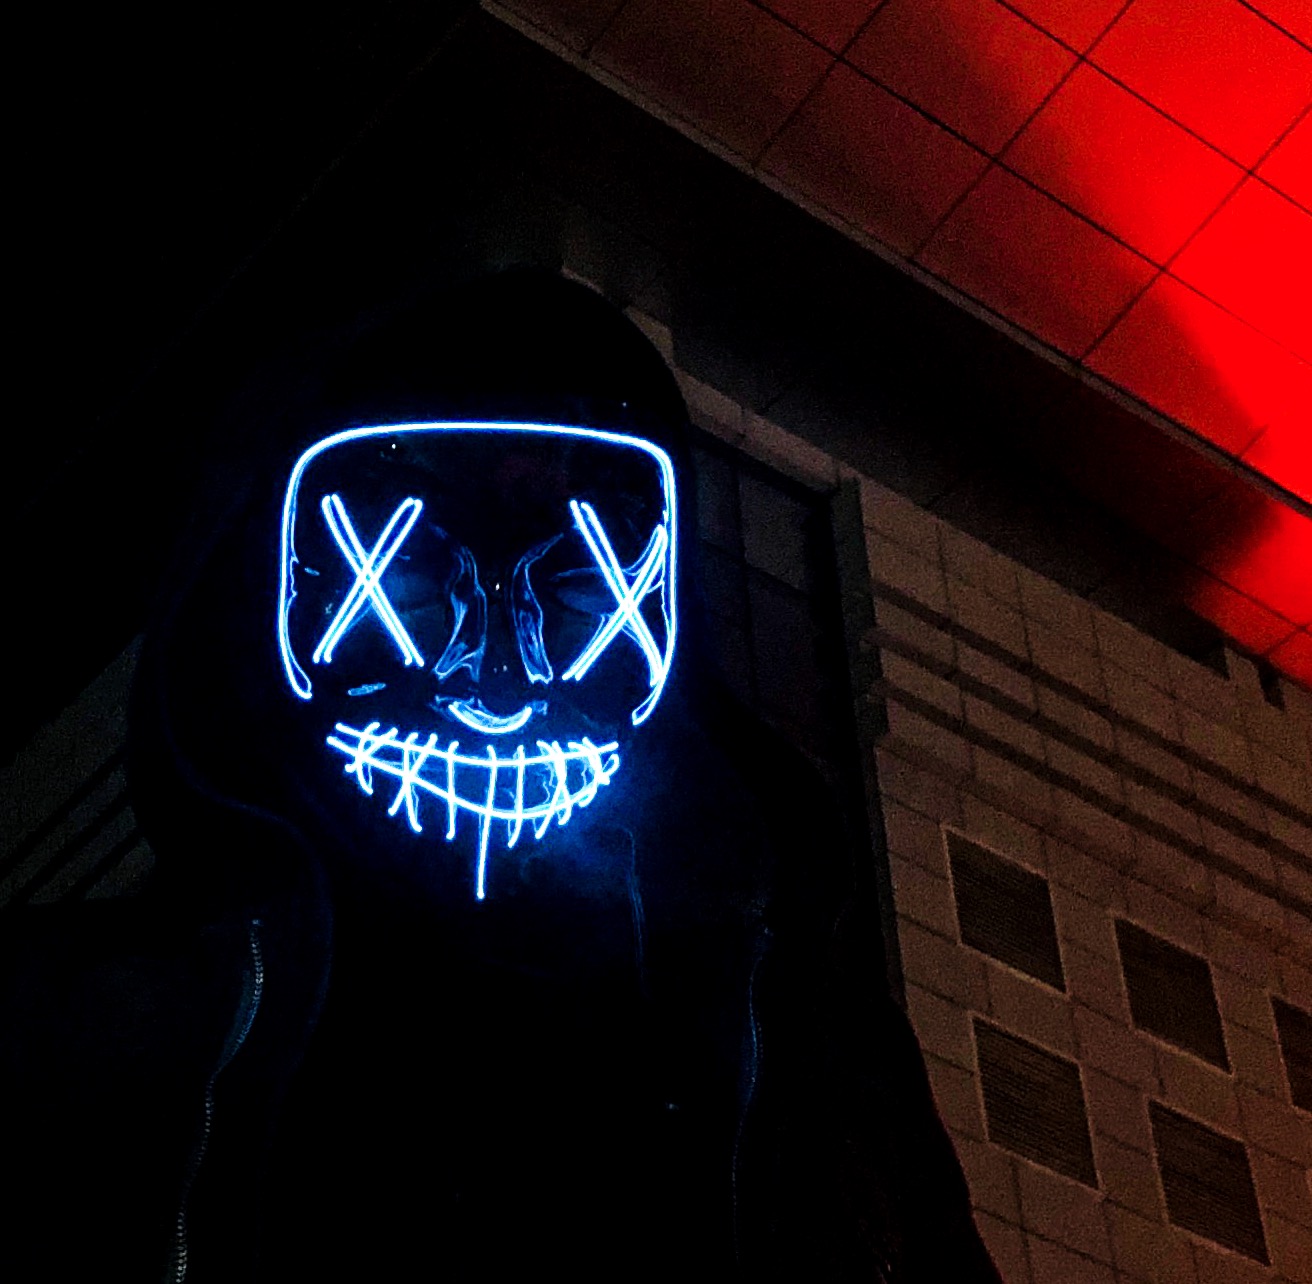 Creepy mask glowing in the dark